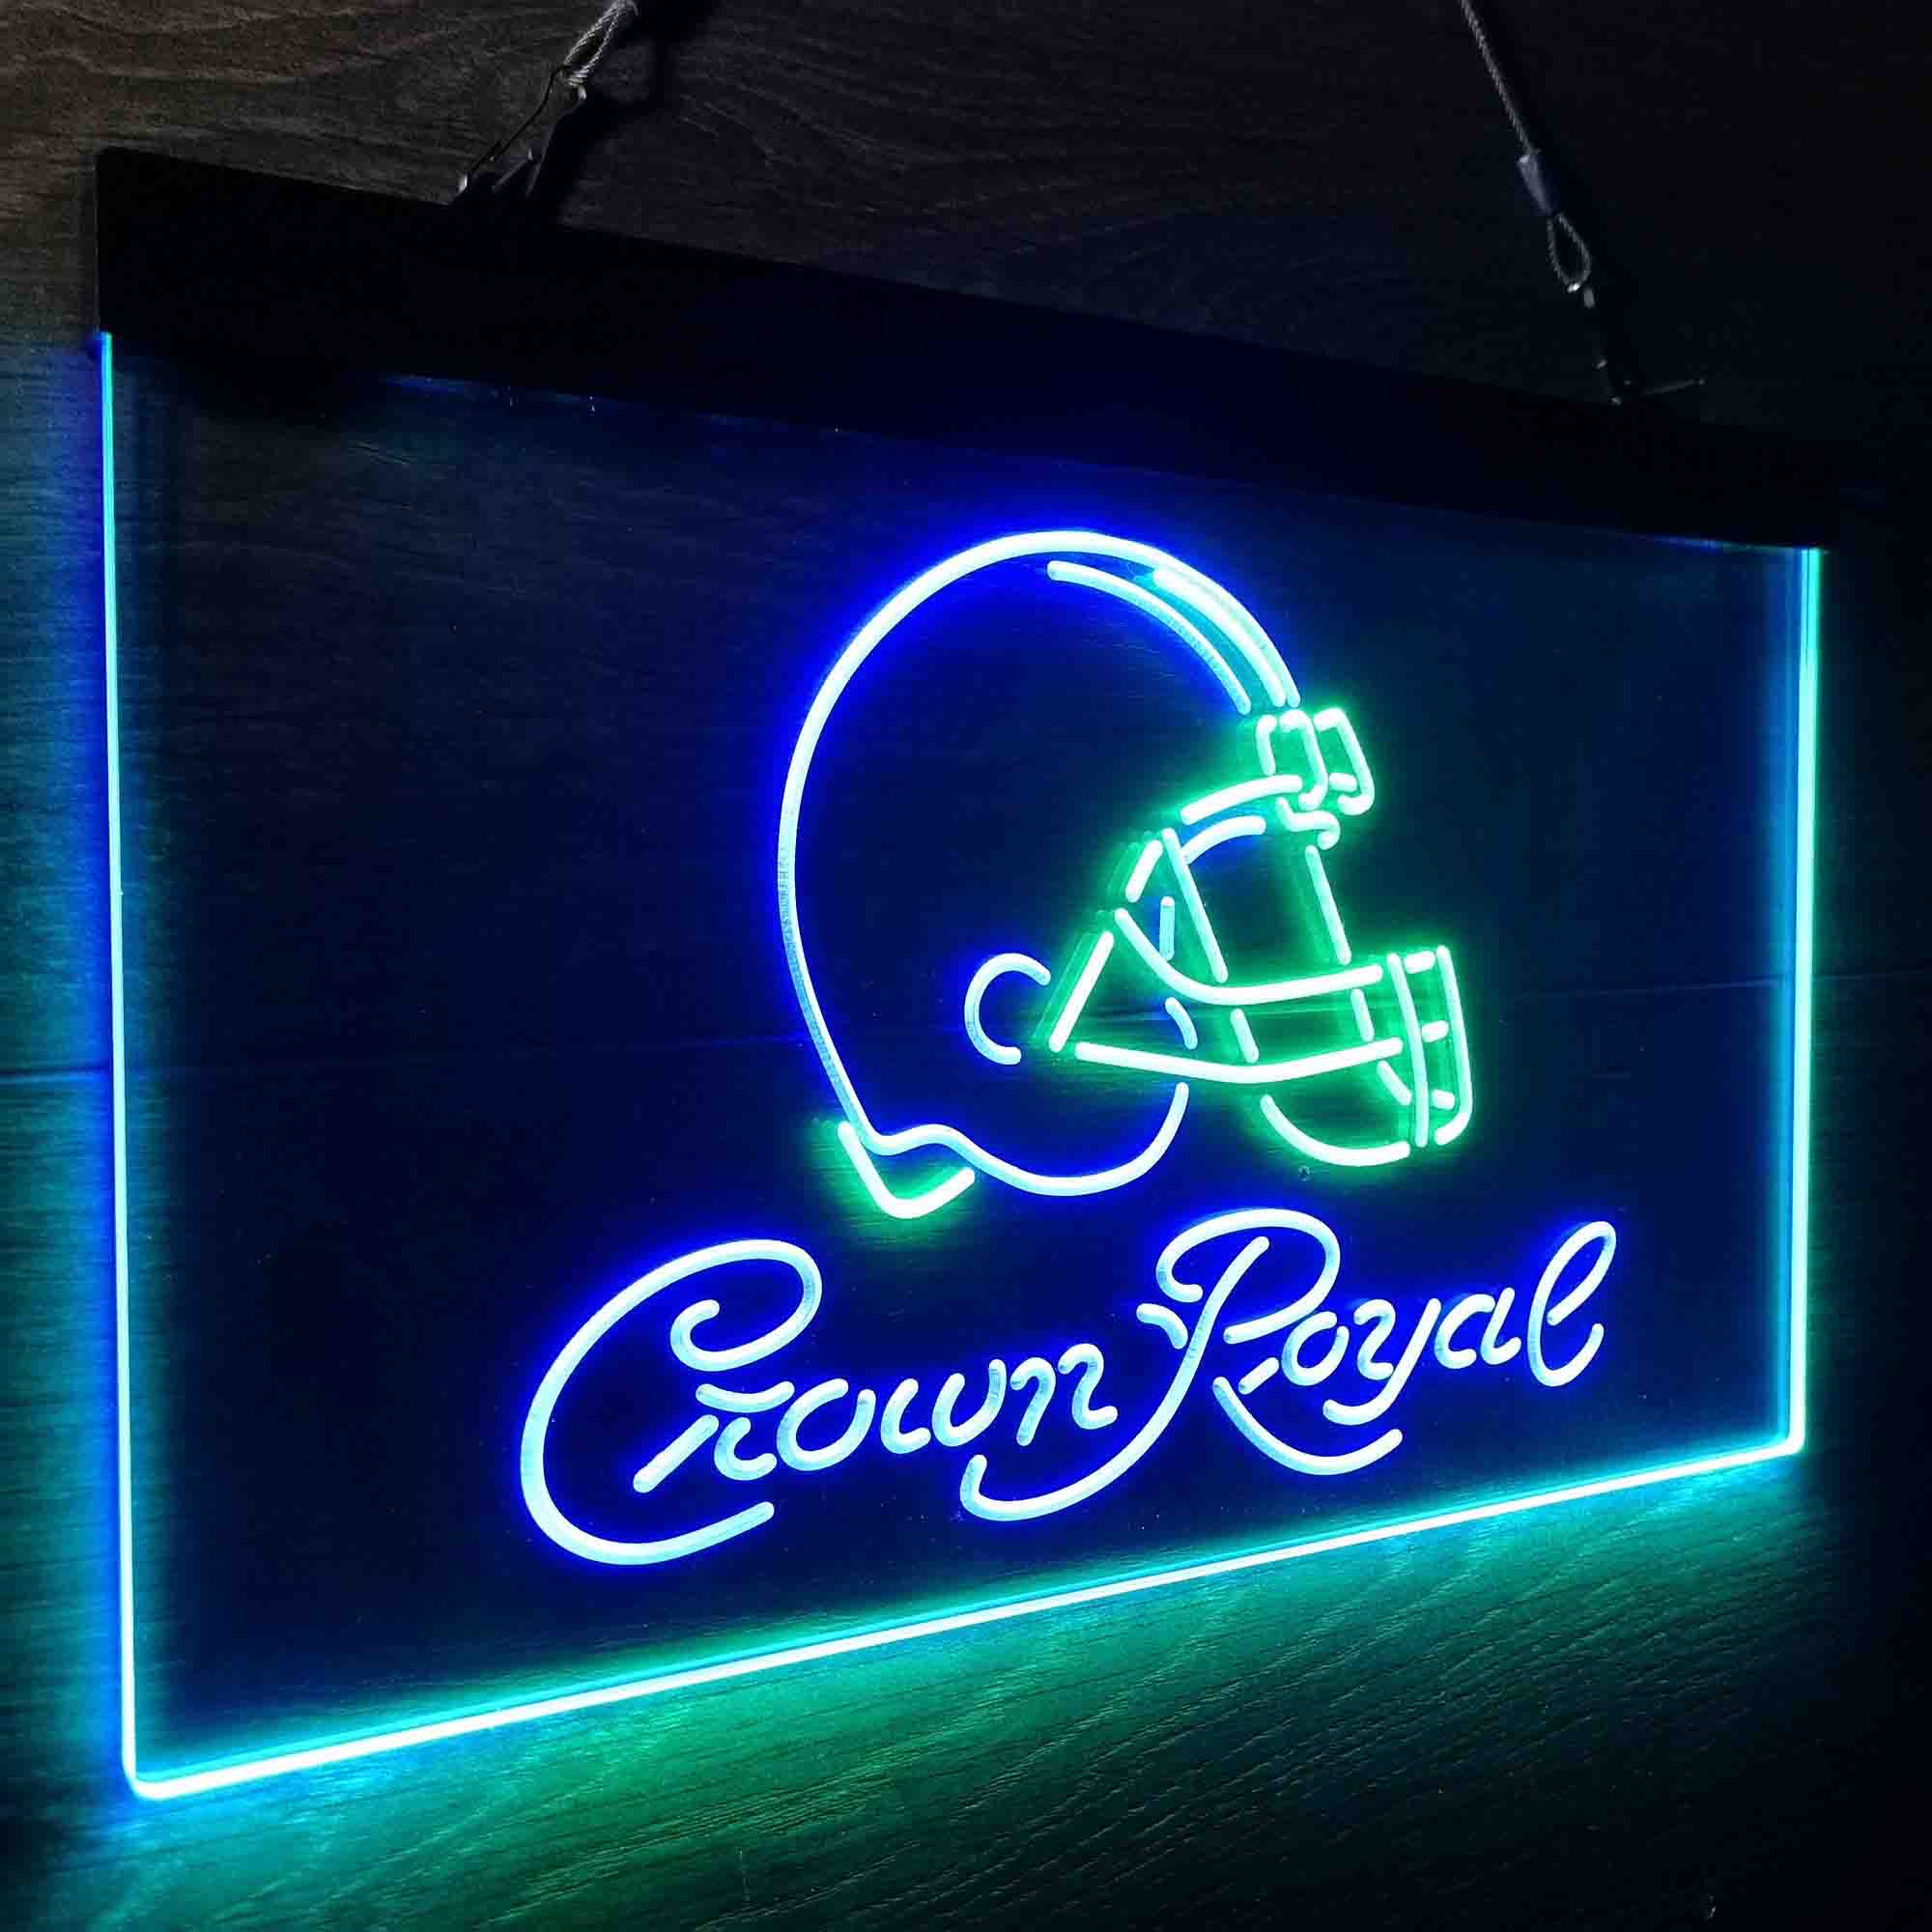 Cleveland Browns Crown Royal Bar Neon-Like LED Sign - ProLedSign